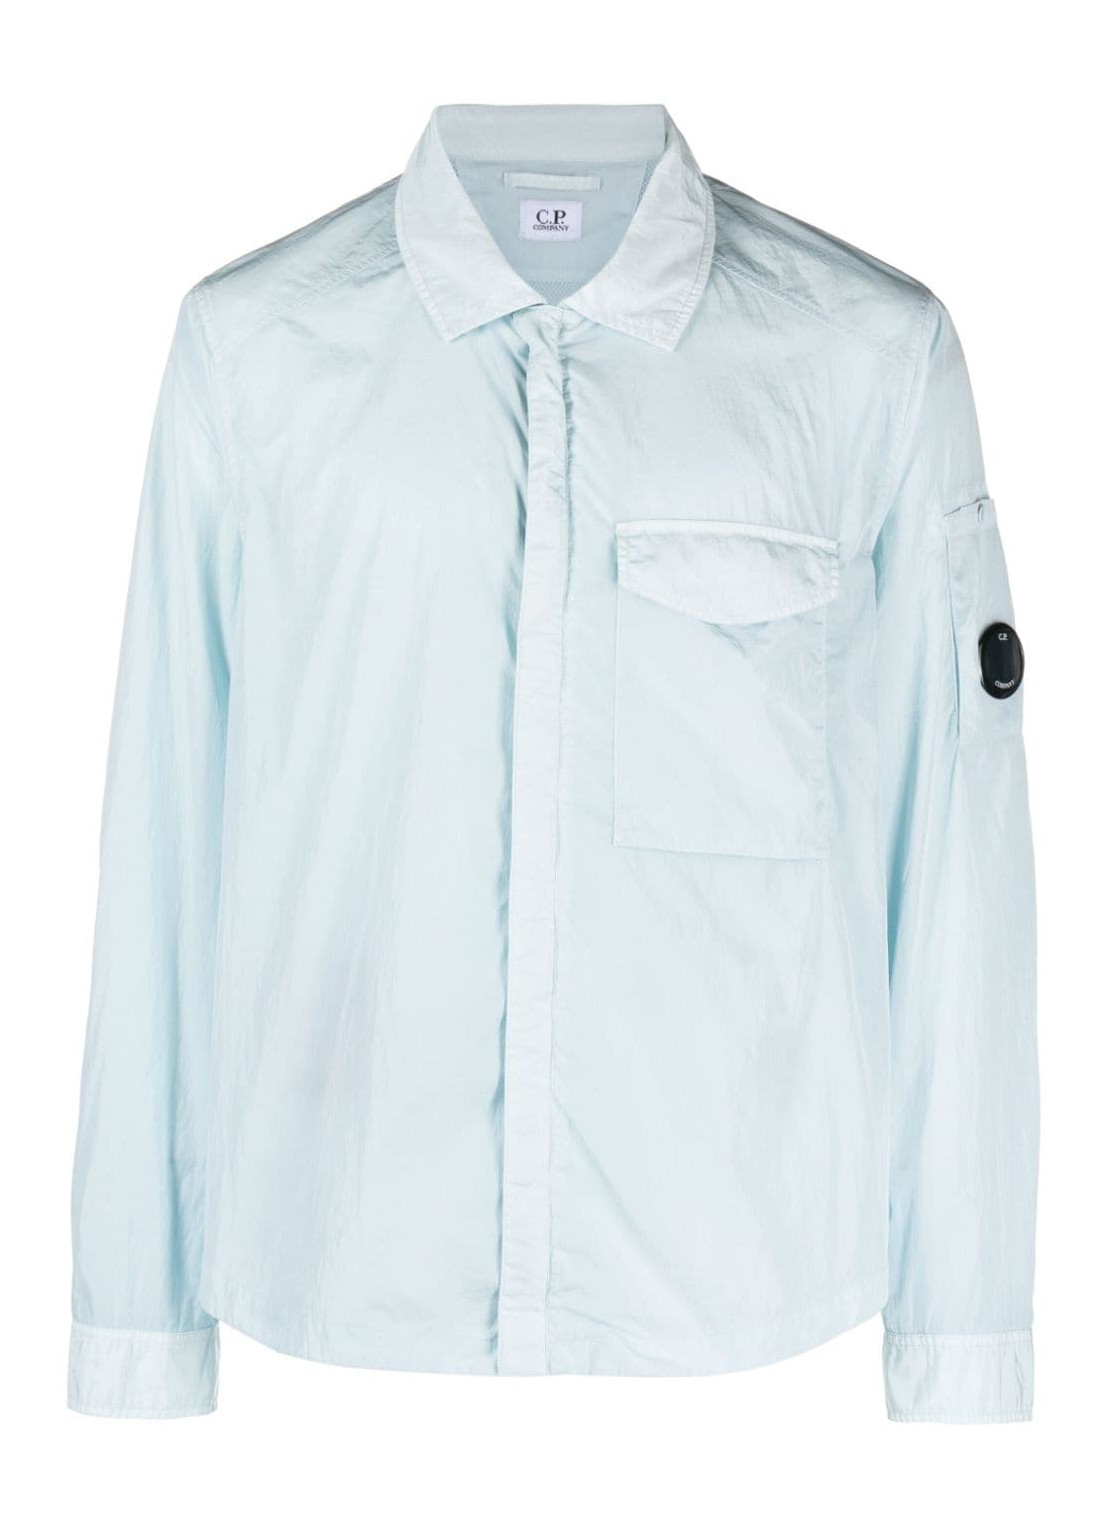 Outerwear c.p.company outerwear man chrome-r pocket overshirt 16cmos039a005904g 806 talla XXL
 